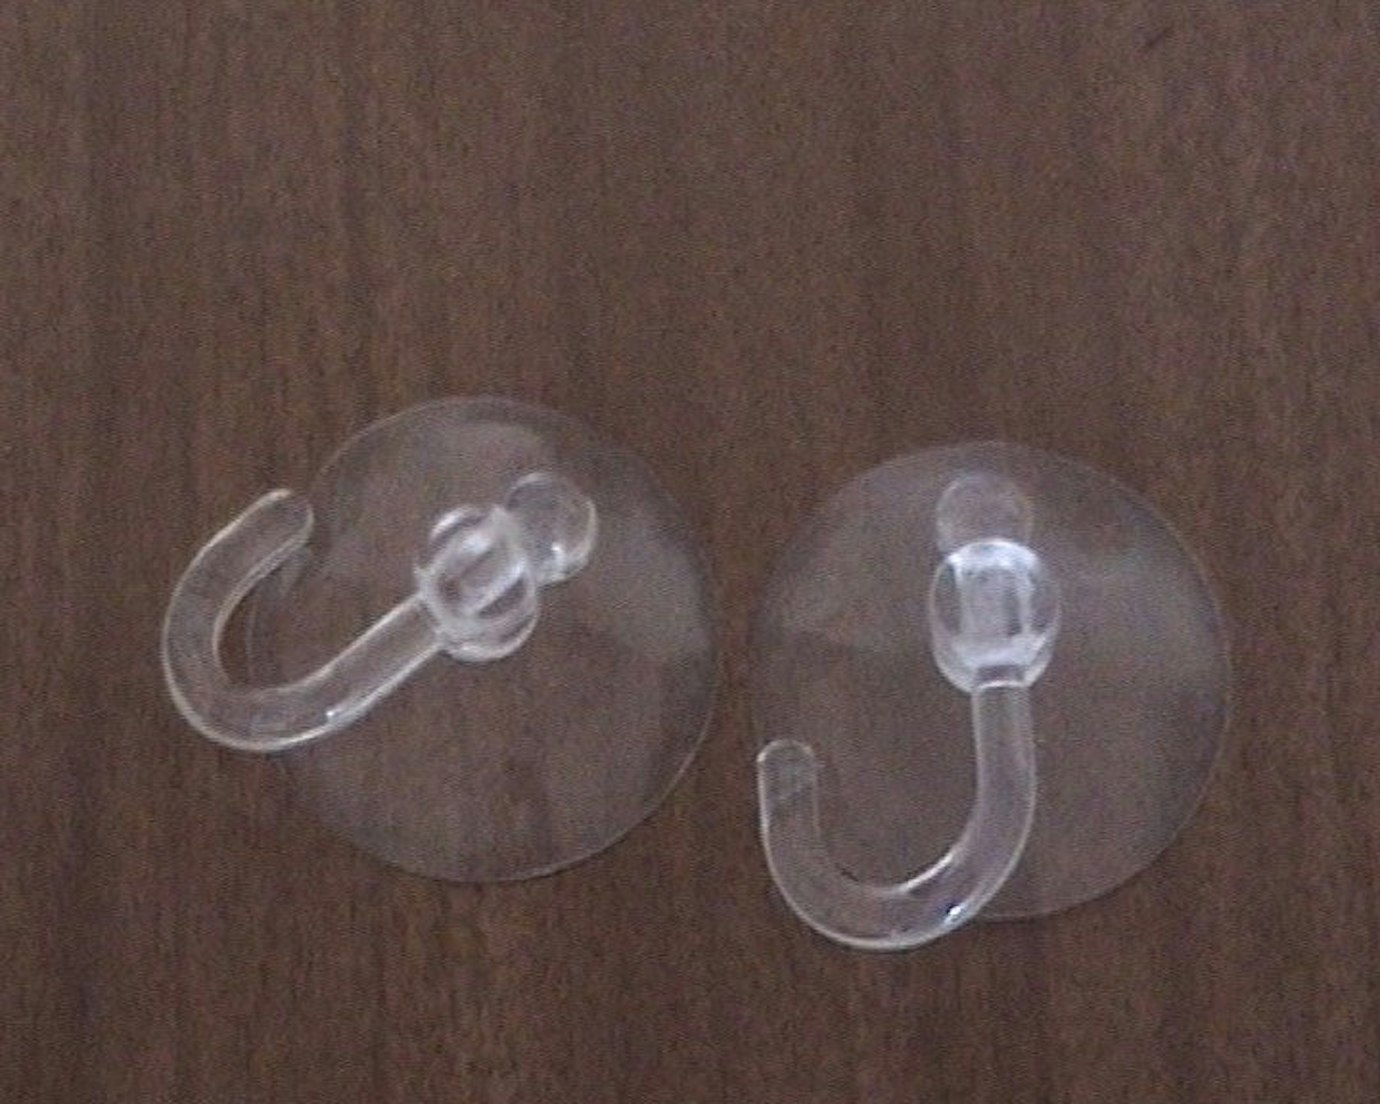 Two cheap self-adhesive plastic hooks